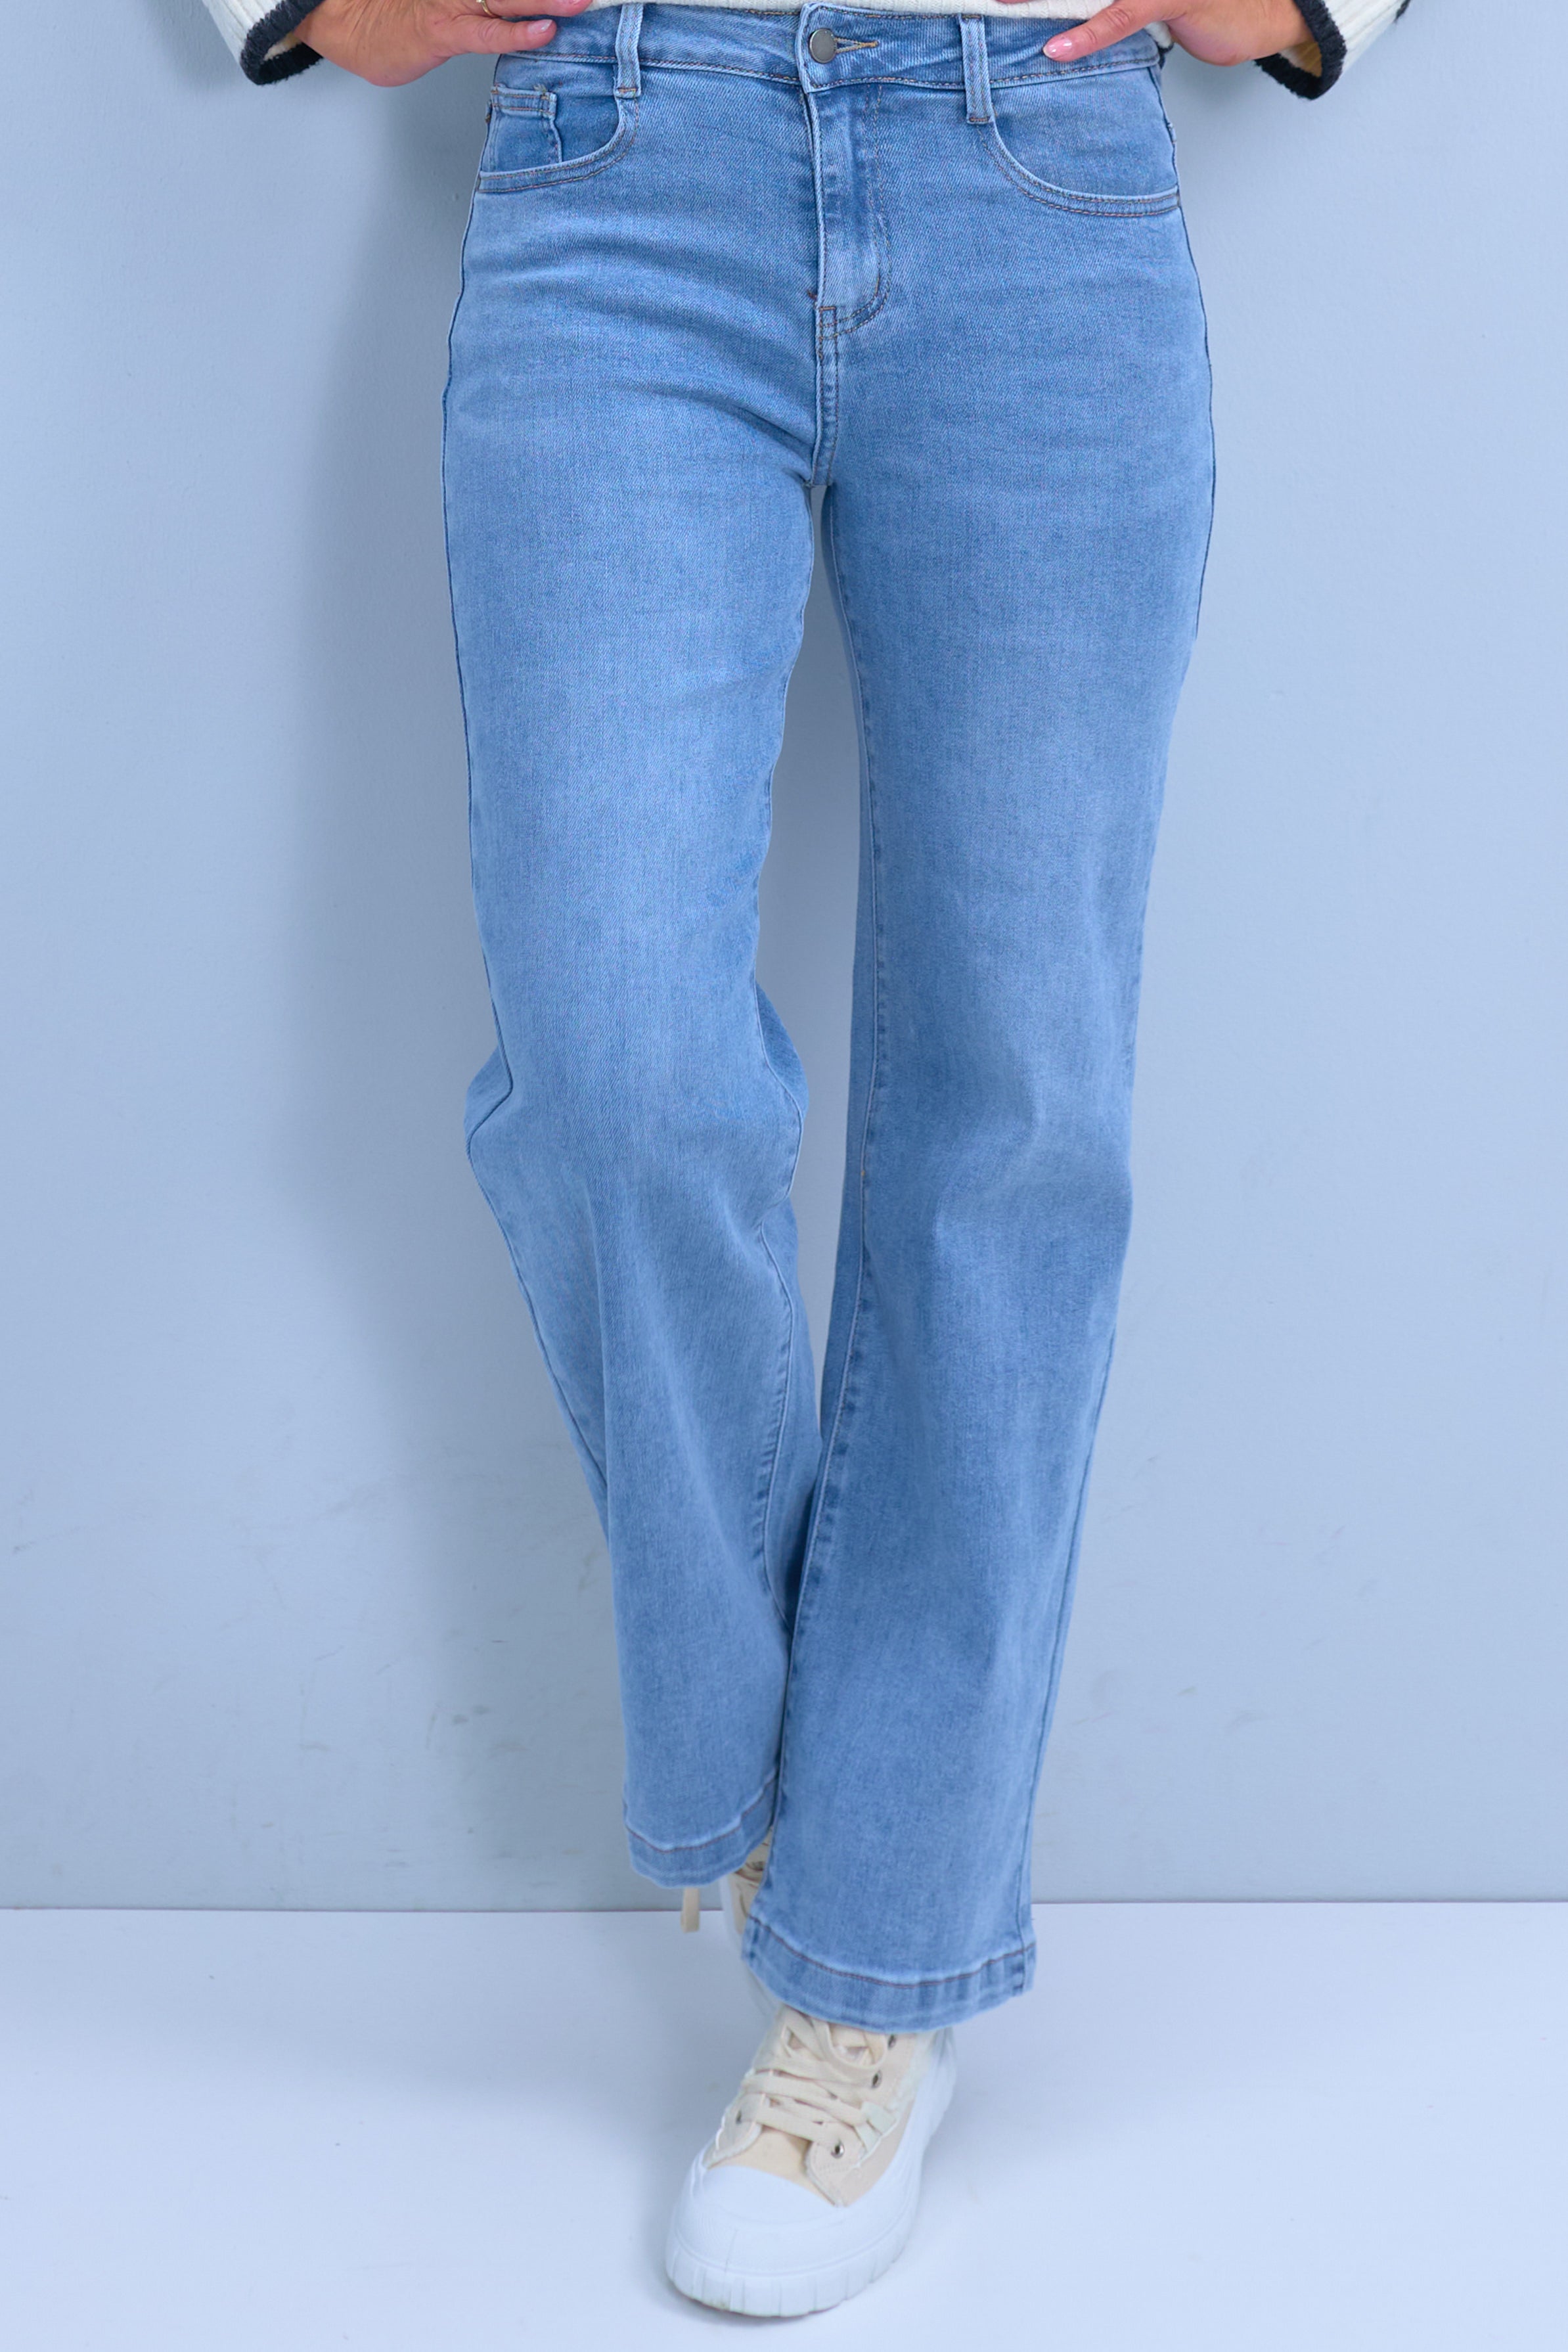 Jeans im Marlene Style, blau